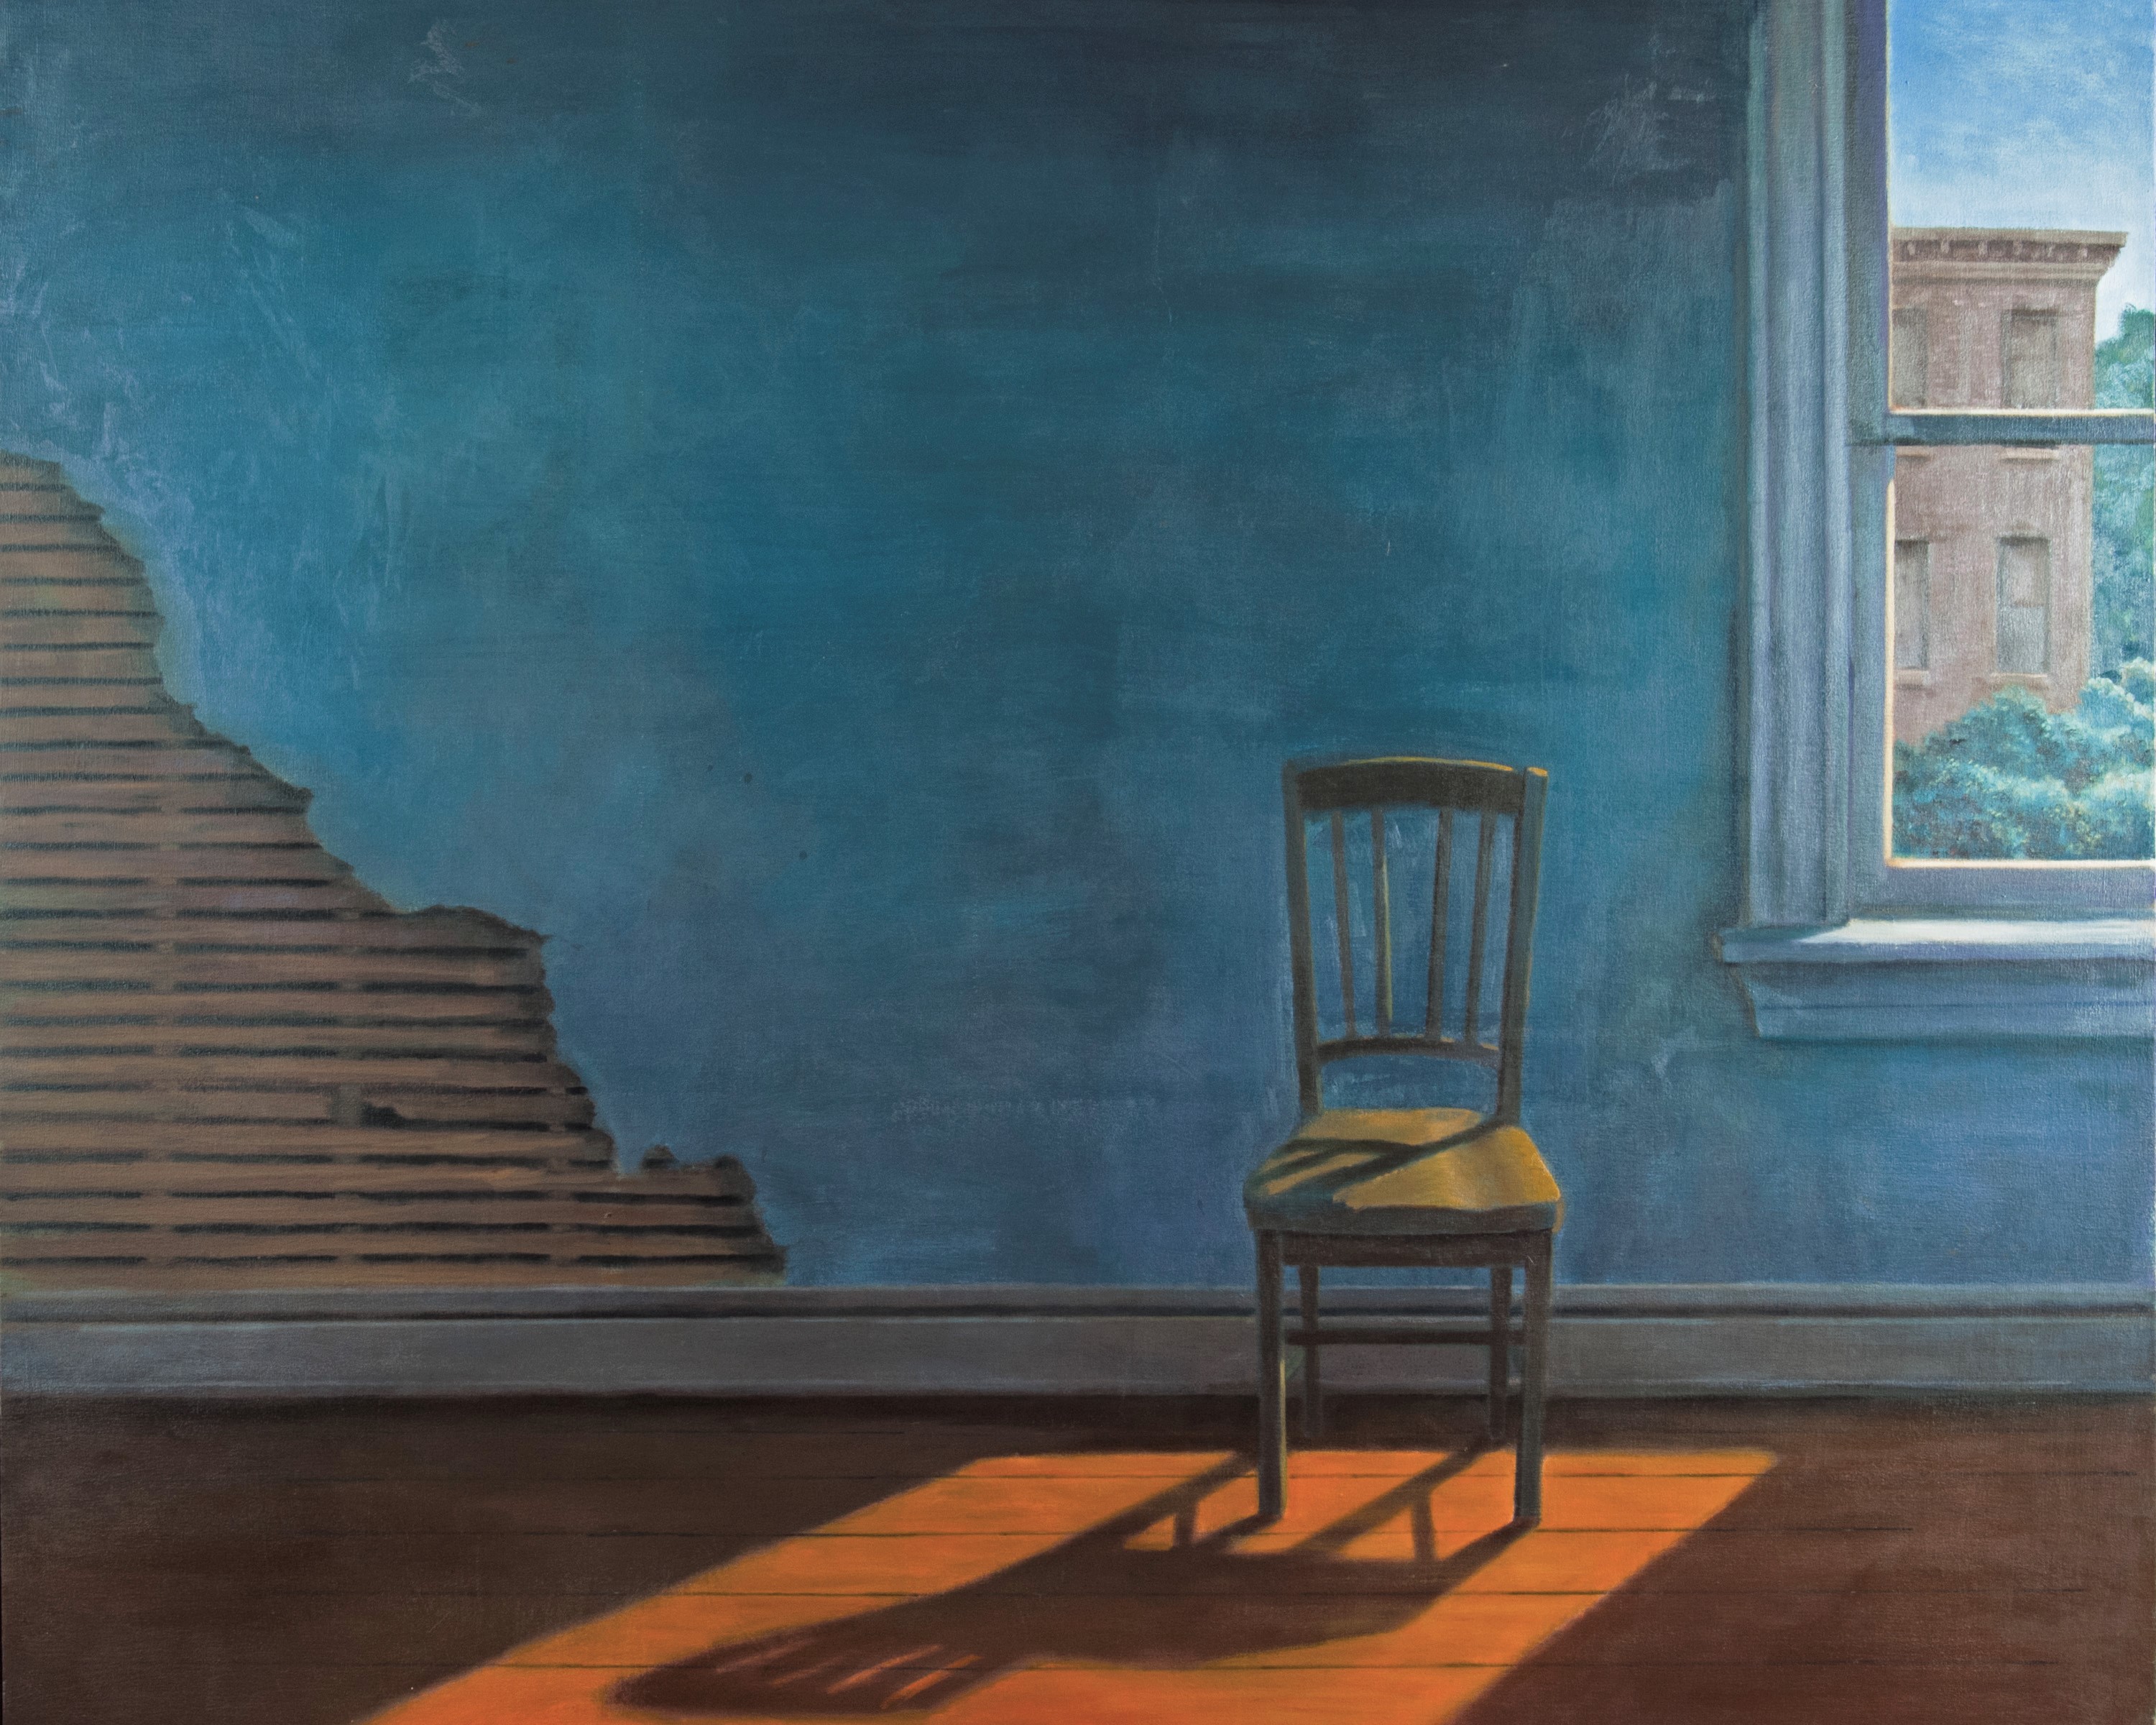 Artist Christopher Brennan. 'Sun On An Empty Chair' Artwork Image, Created in 2006, Original Painting Oil. #art #artist